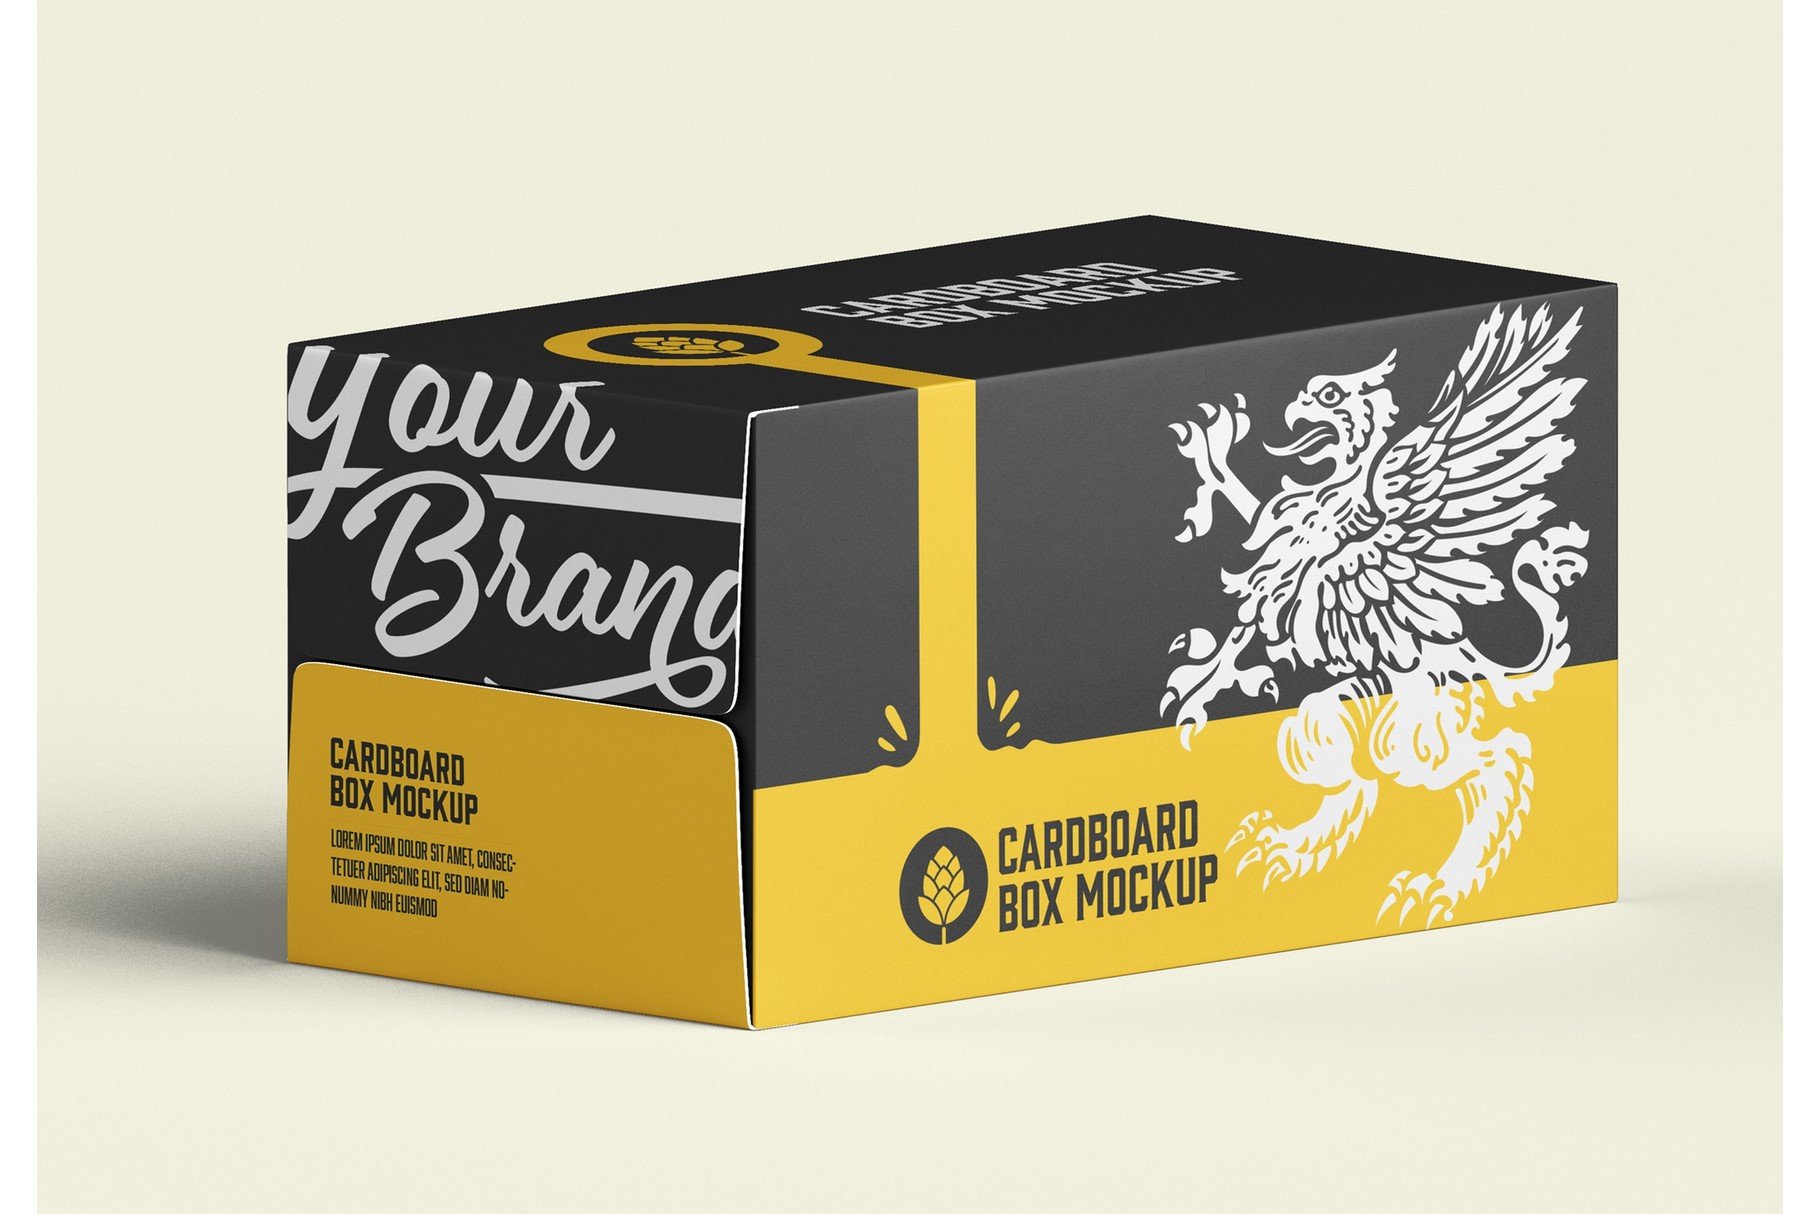 Beer Cardboard Box Mockup cover image.